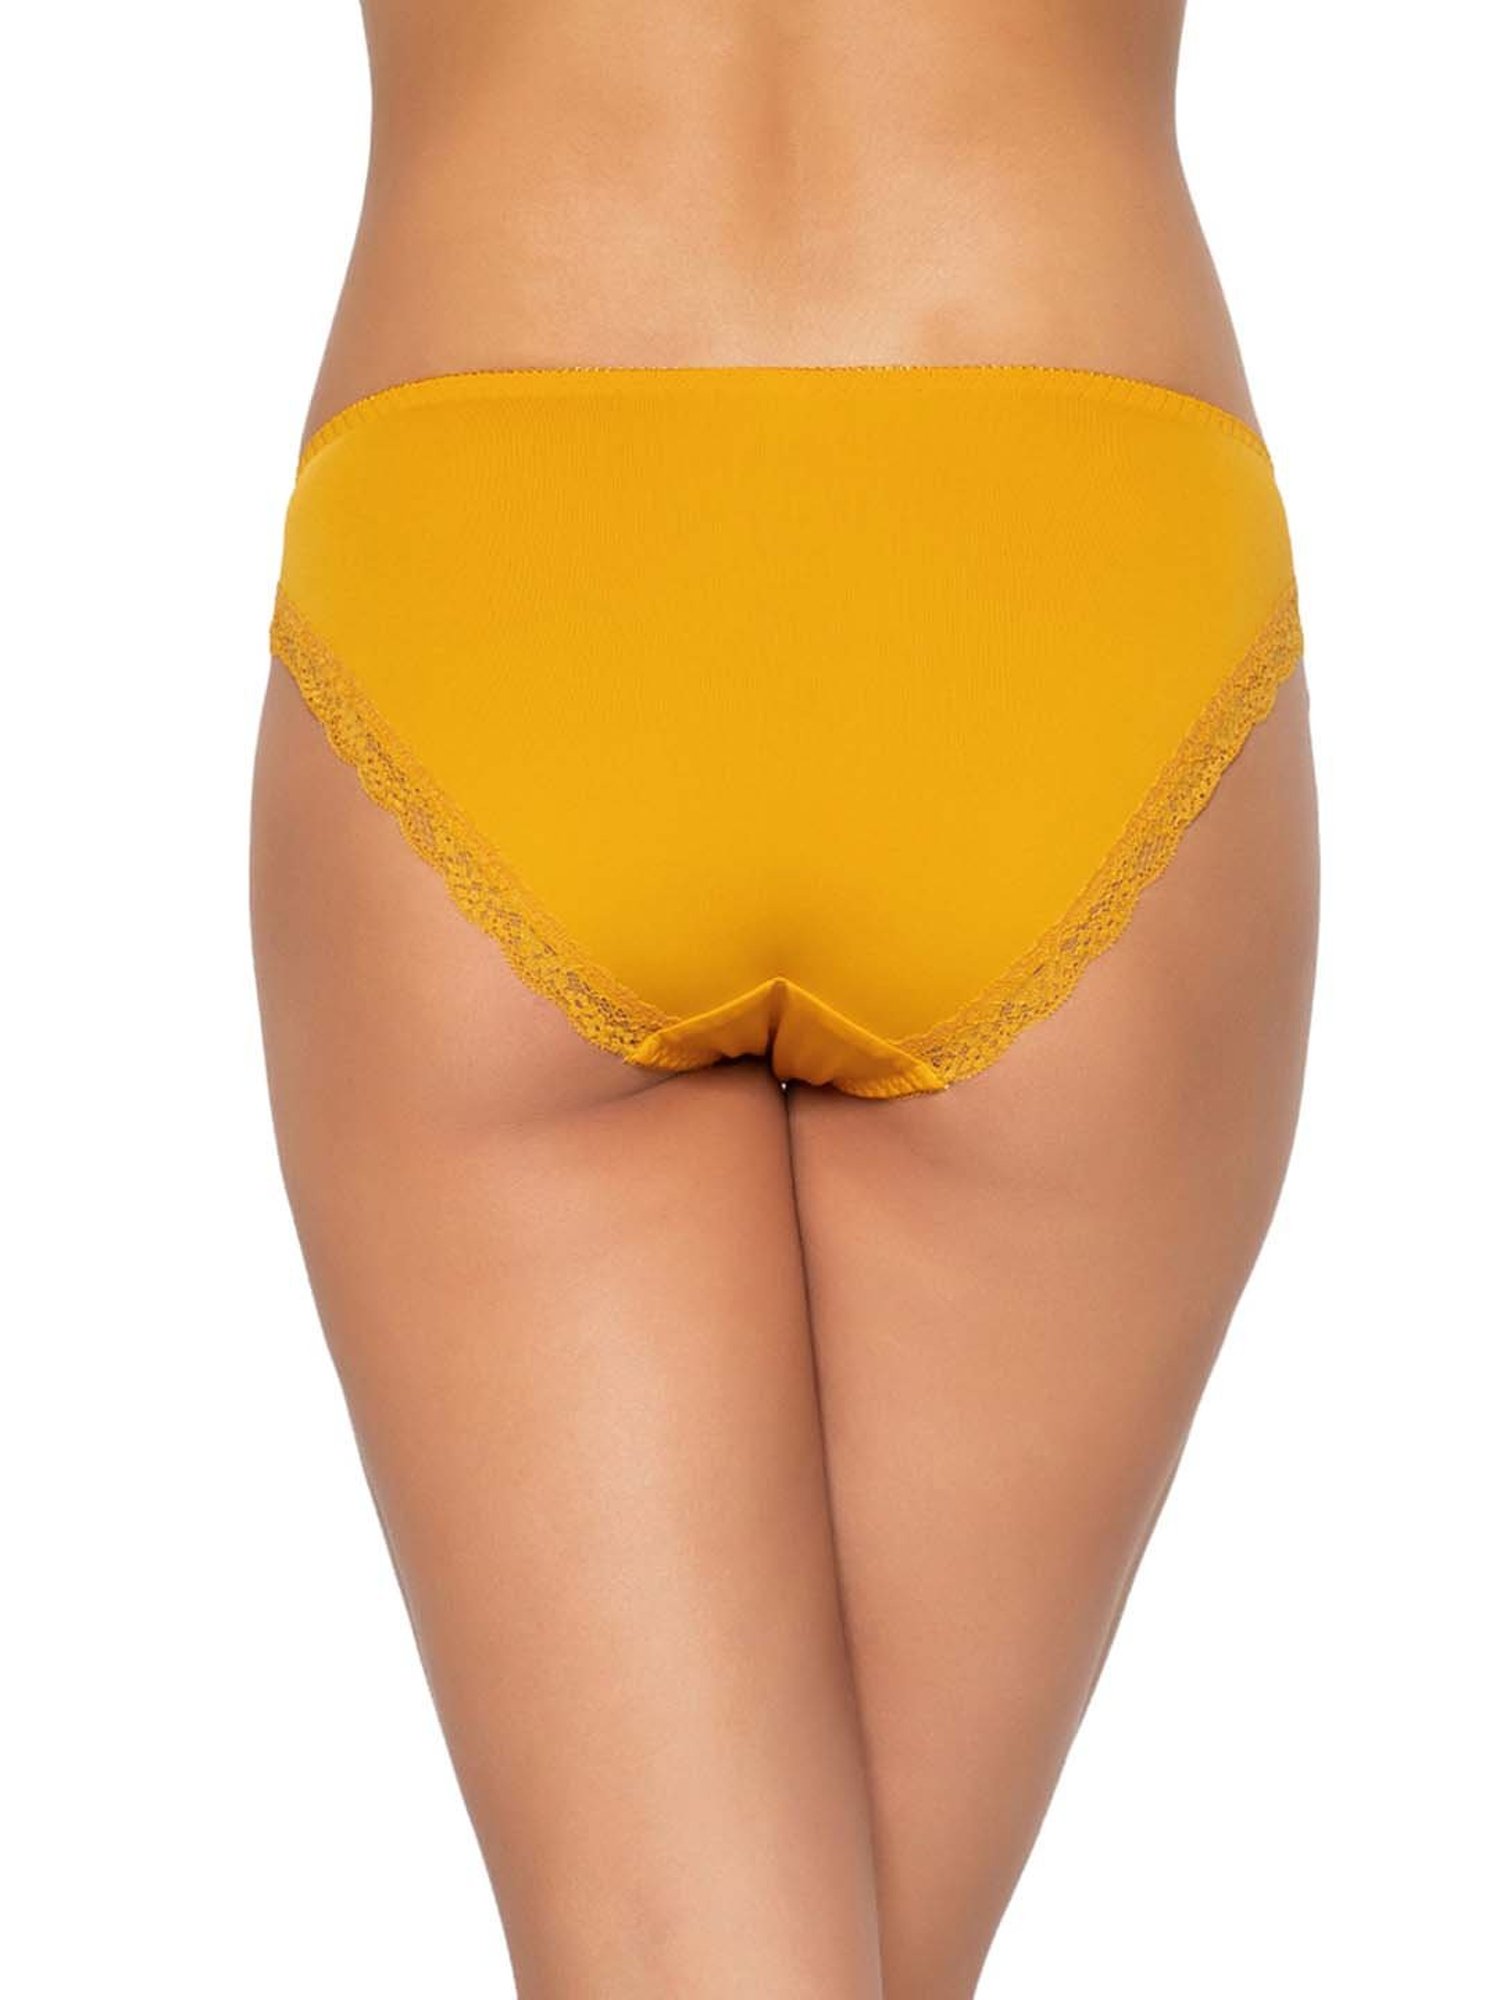 Buy YELLOWDELIGHT Women Panty 80cm Brown,Navy at